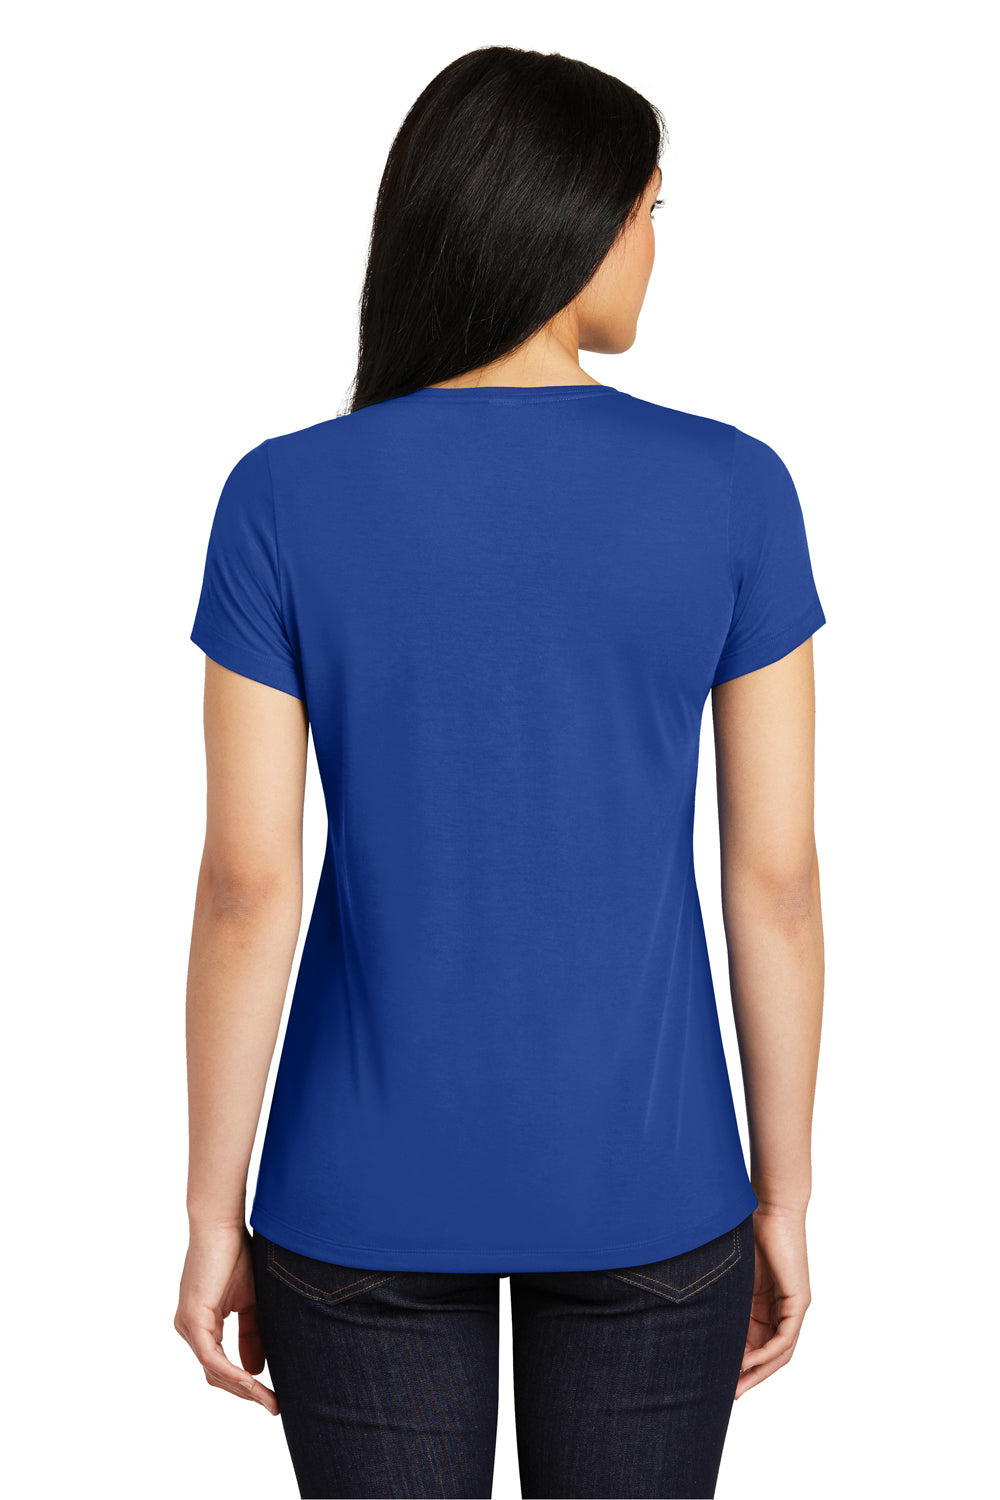 Sport-Tek LST450 Womens Competitor Moisture Wicking Short Sleeve Scoop Neck T-Shirt Royal Blue Back